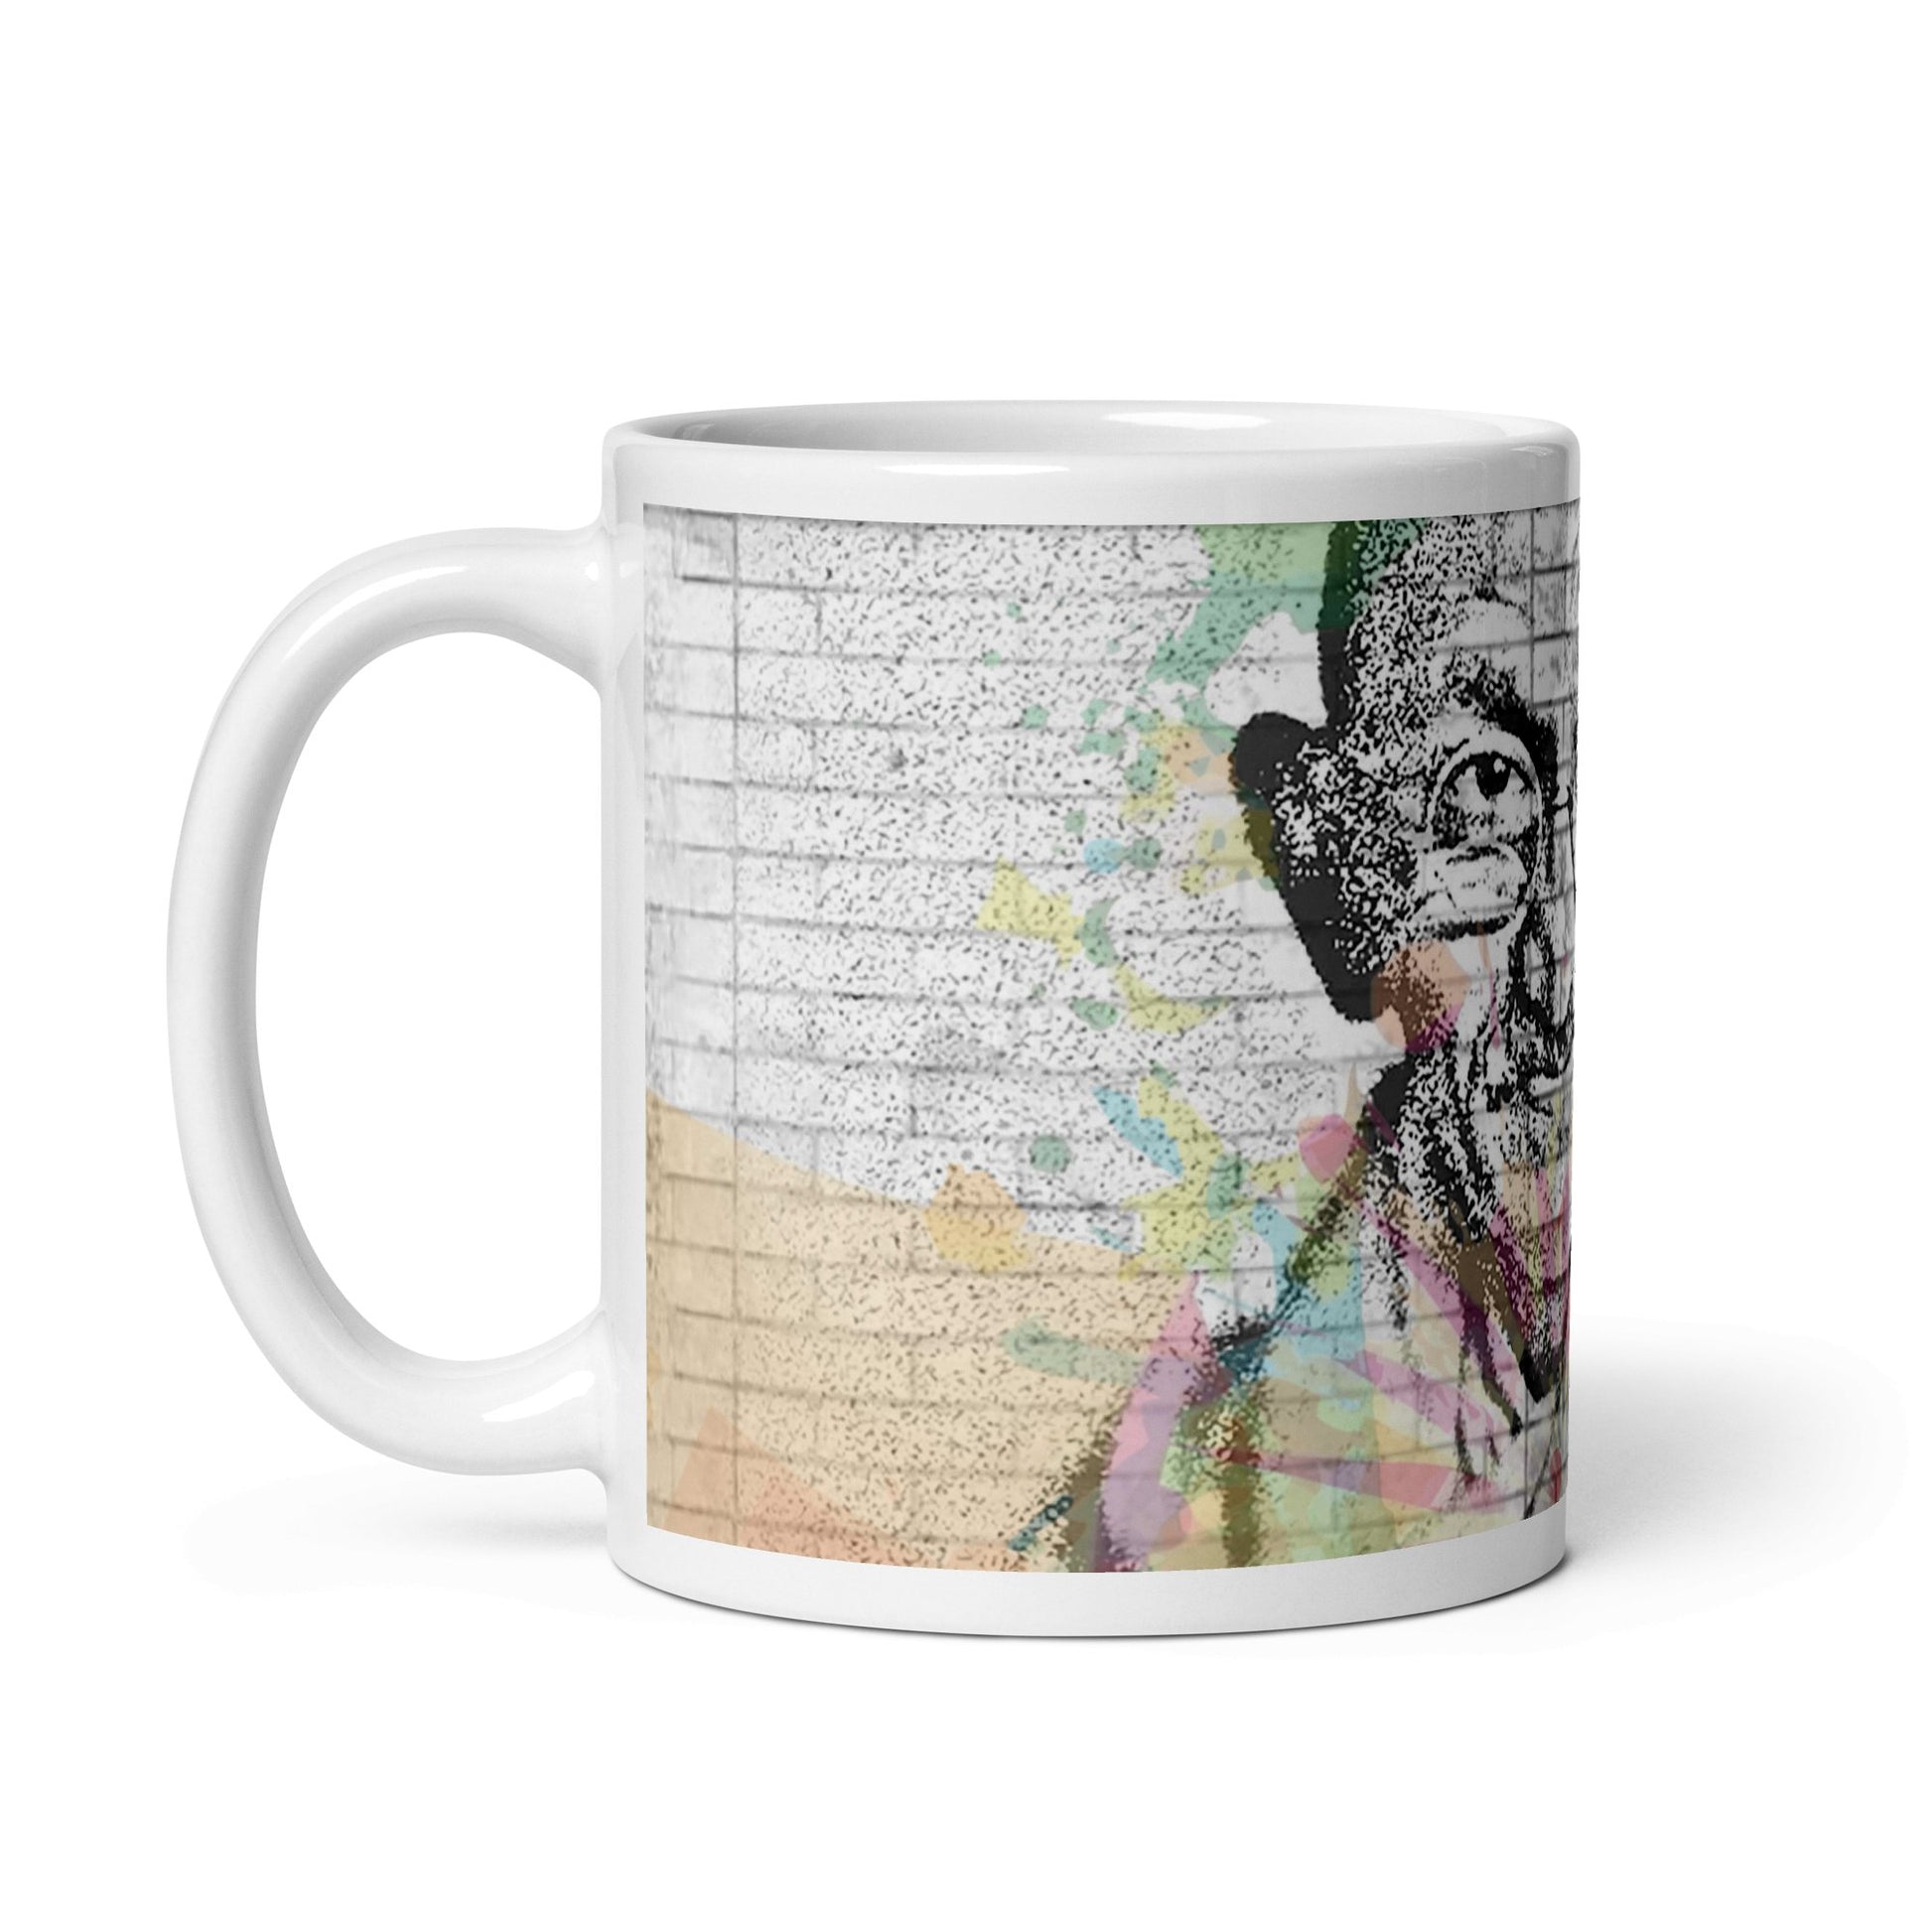 Mahatma Gandhi glossy mug - Souled Out World